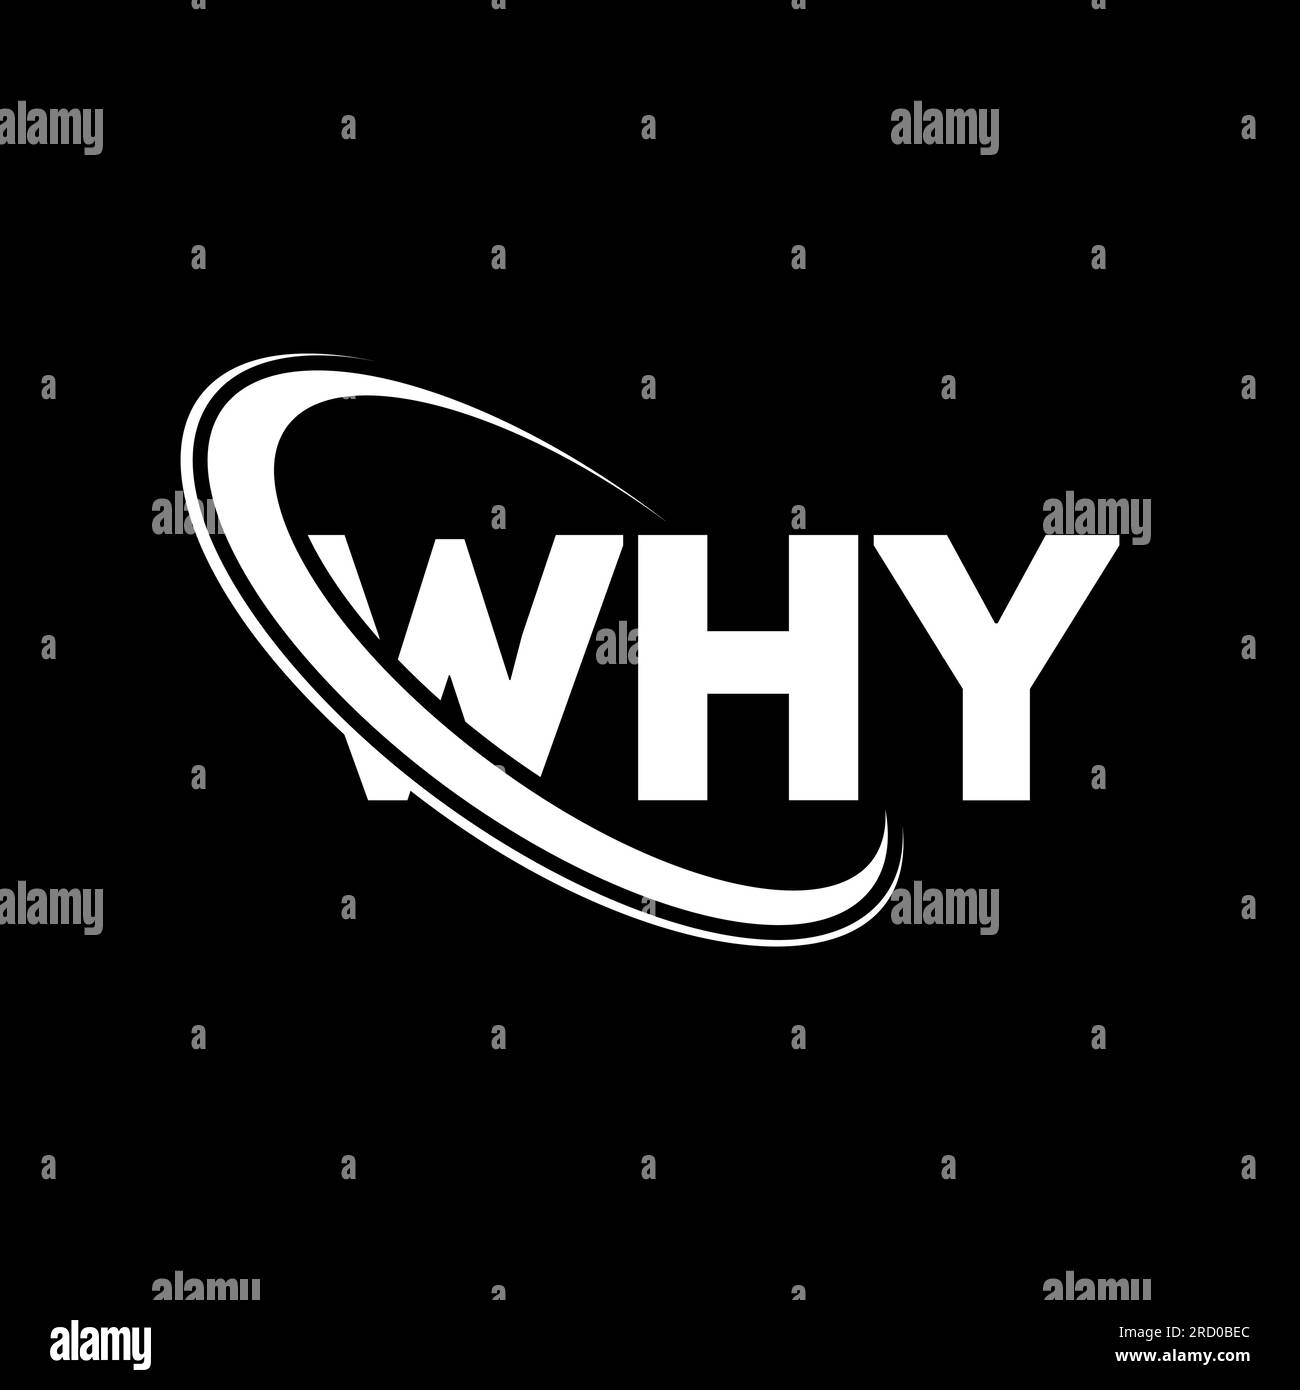 Whu logo design Black and White Stock Photos & Images - Alamy